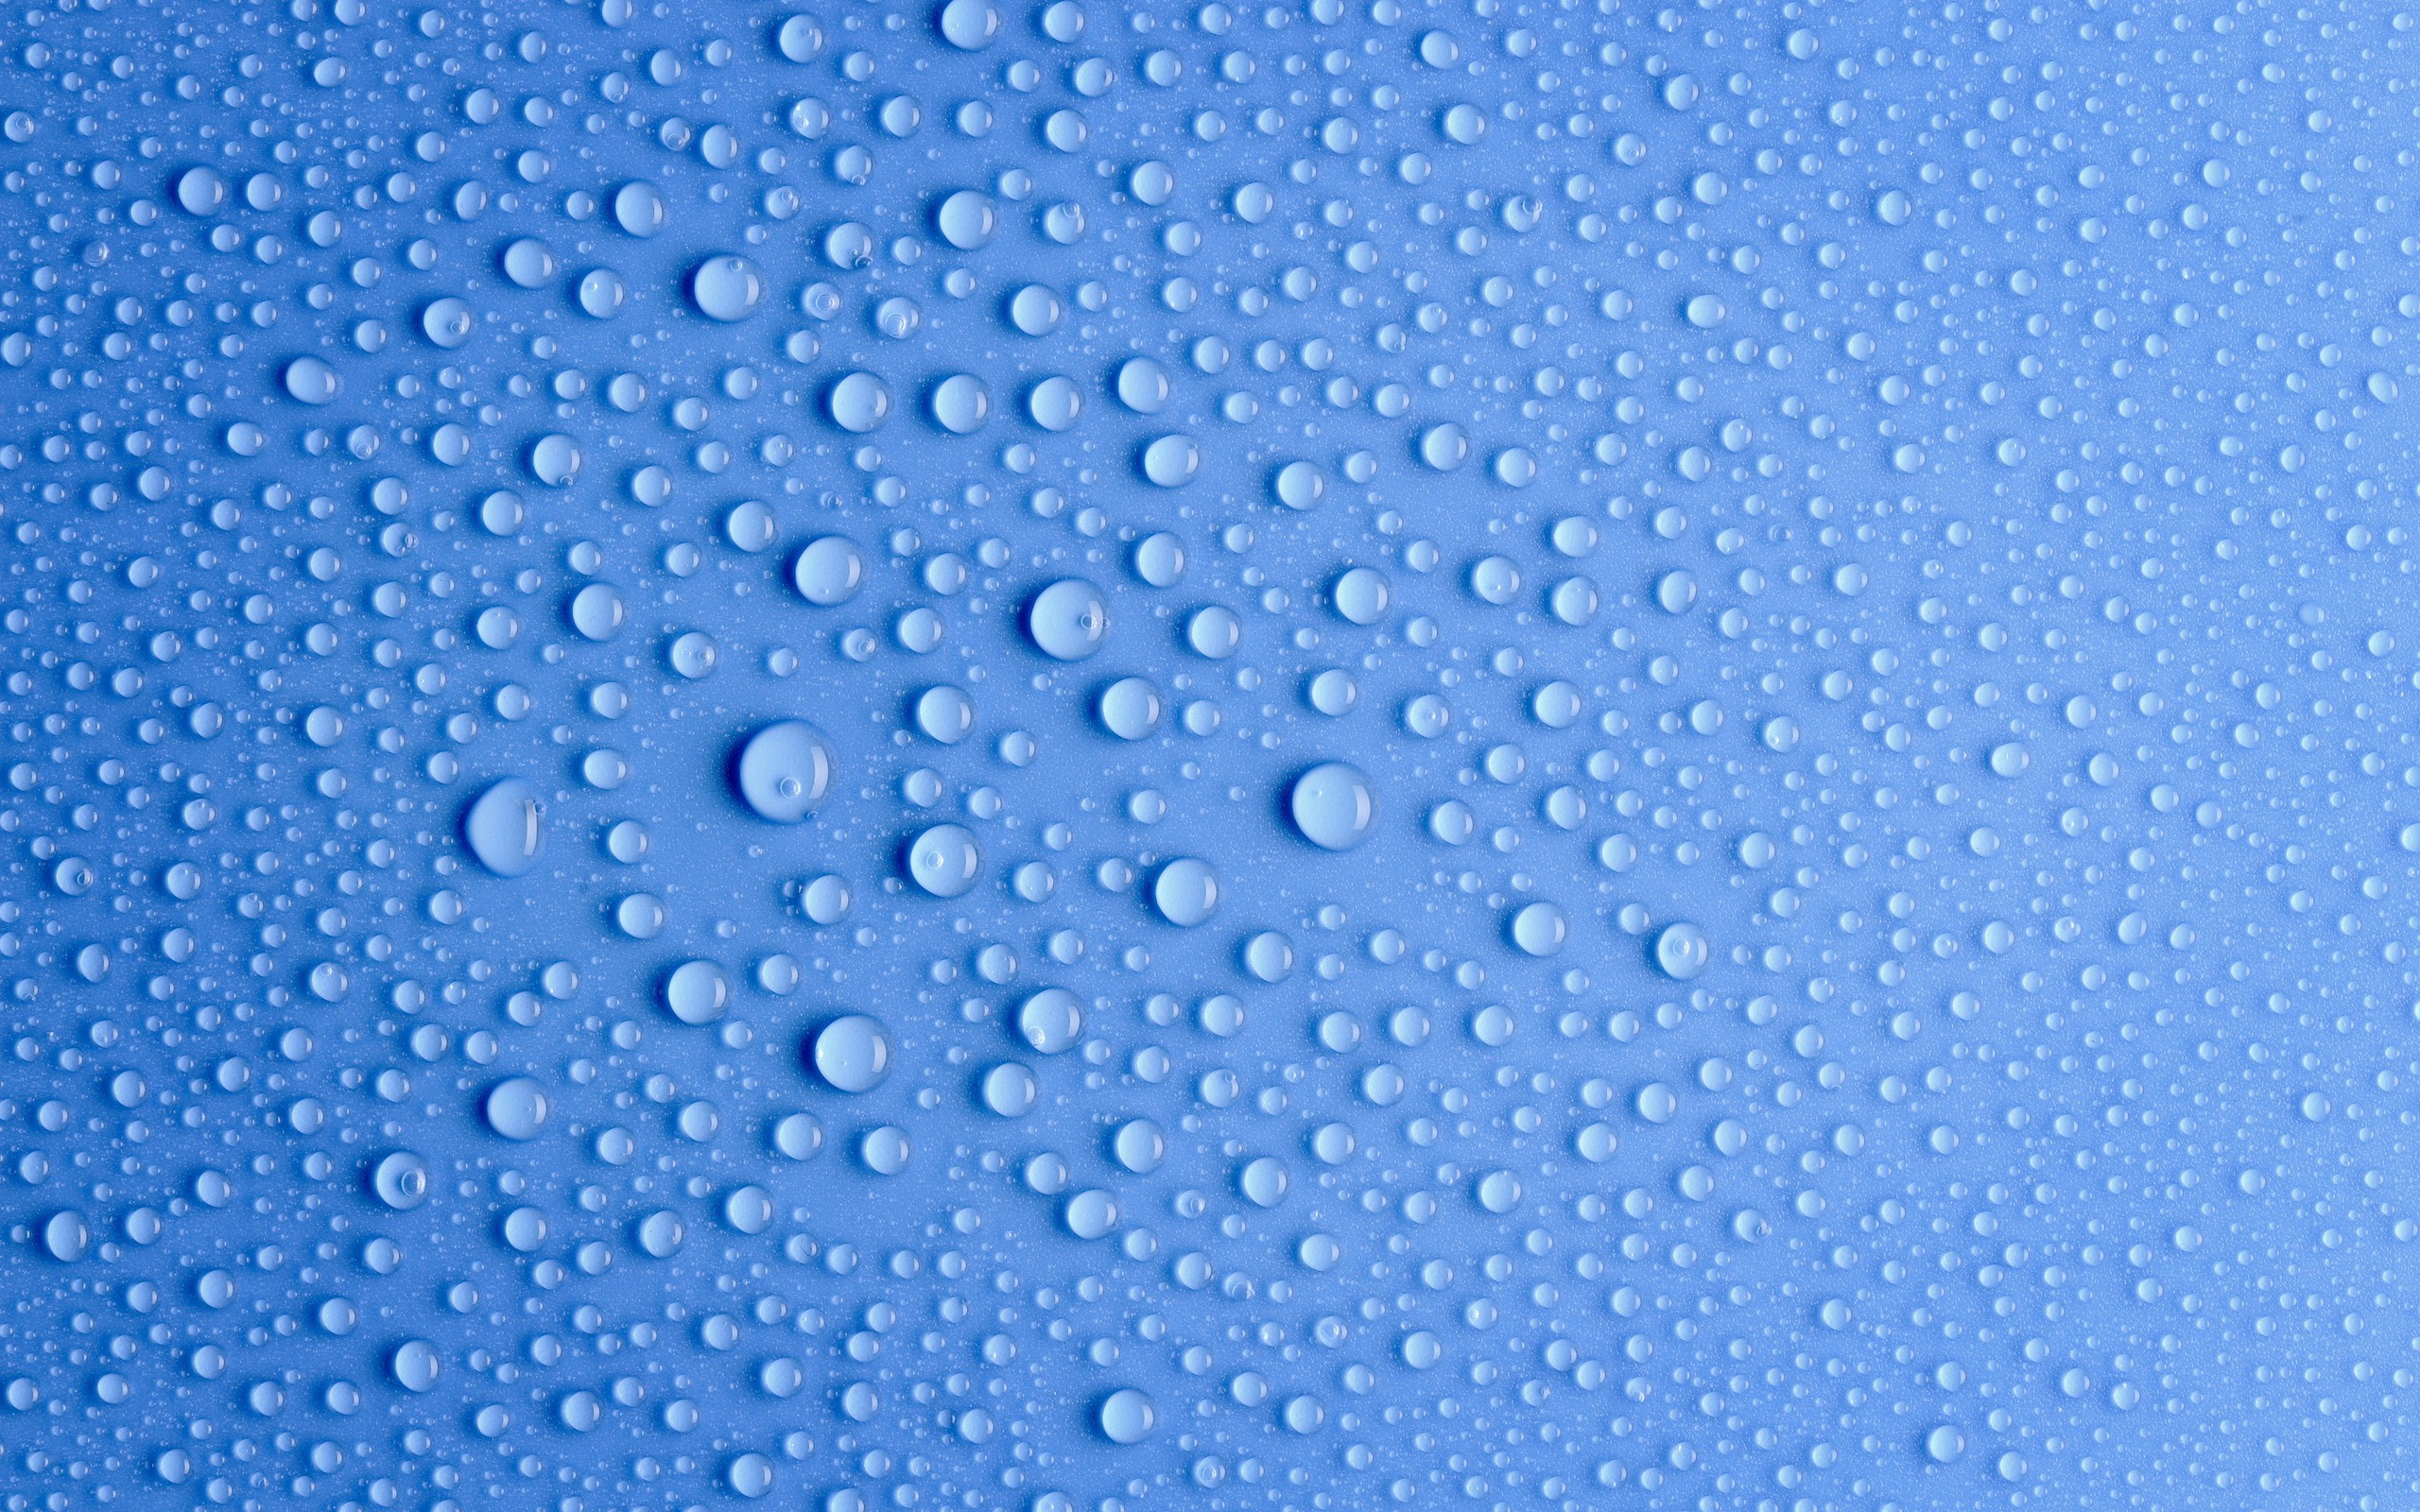 2560x1600 Blue water drops wallpaper background